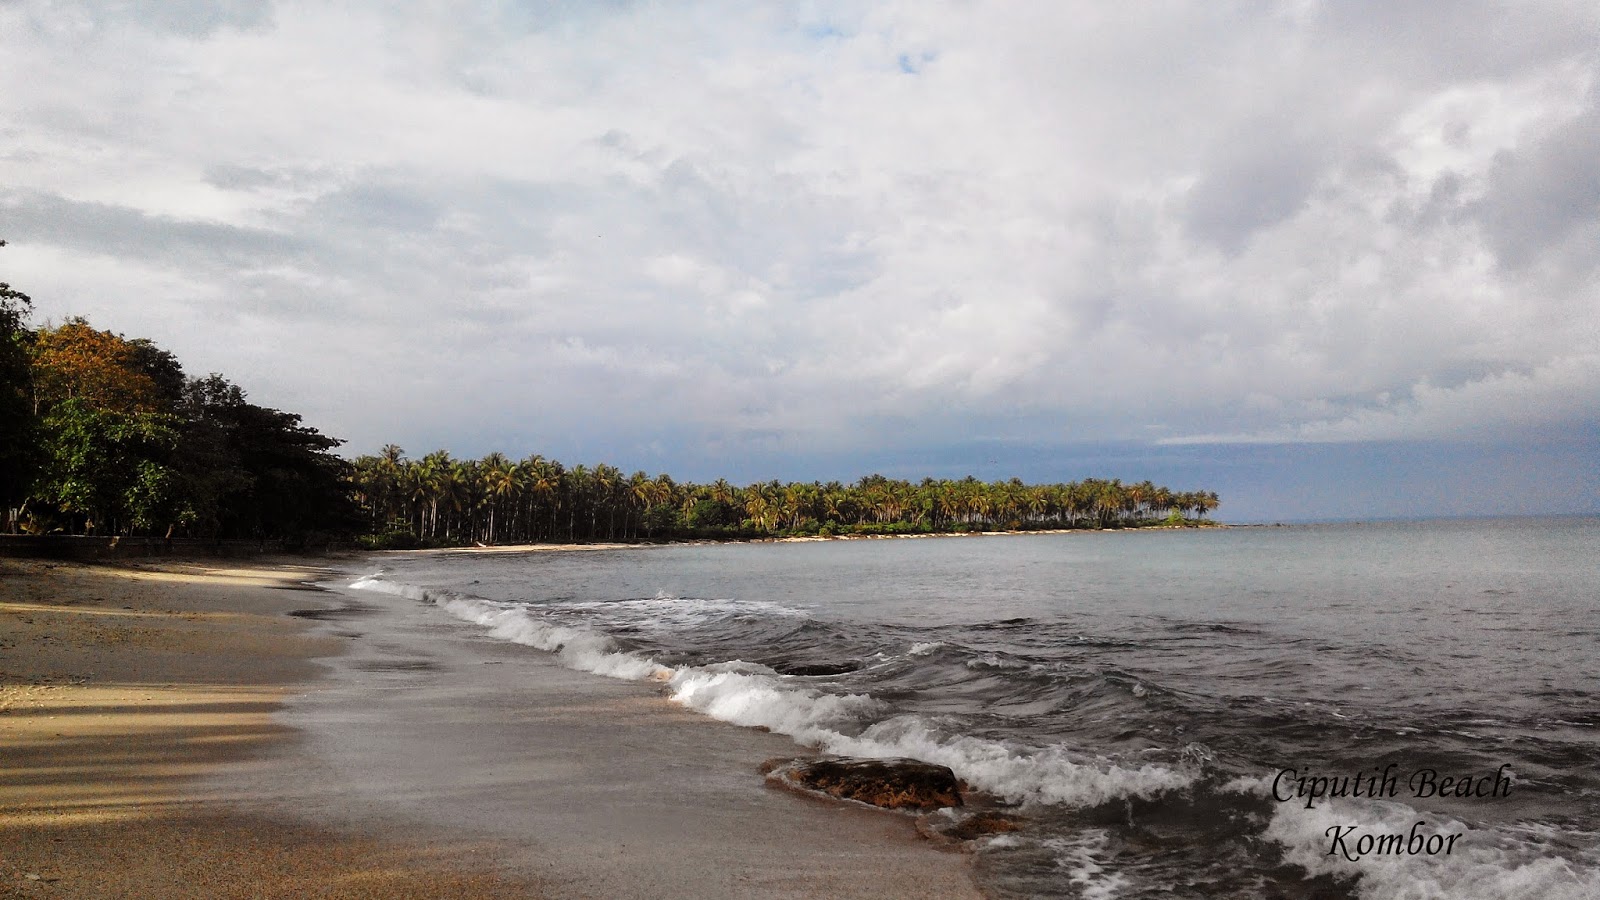 Pantai Ciputih, Ujung Kulon, Sumur, Pandeglang, Banten